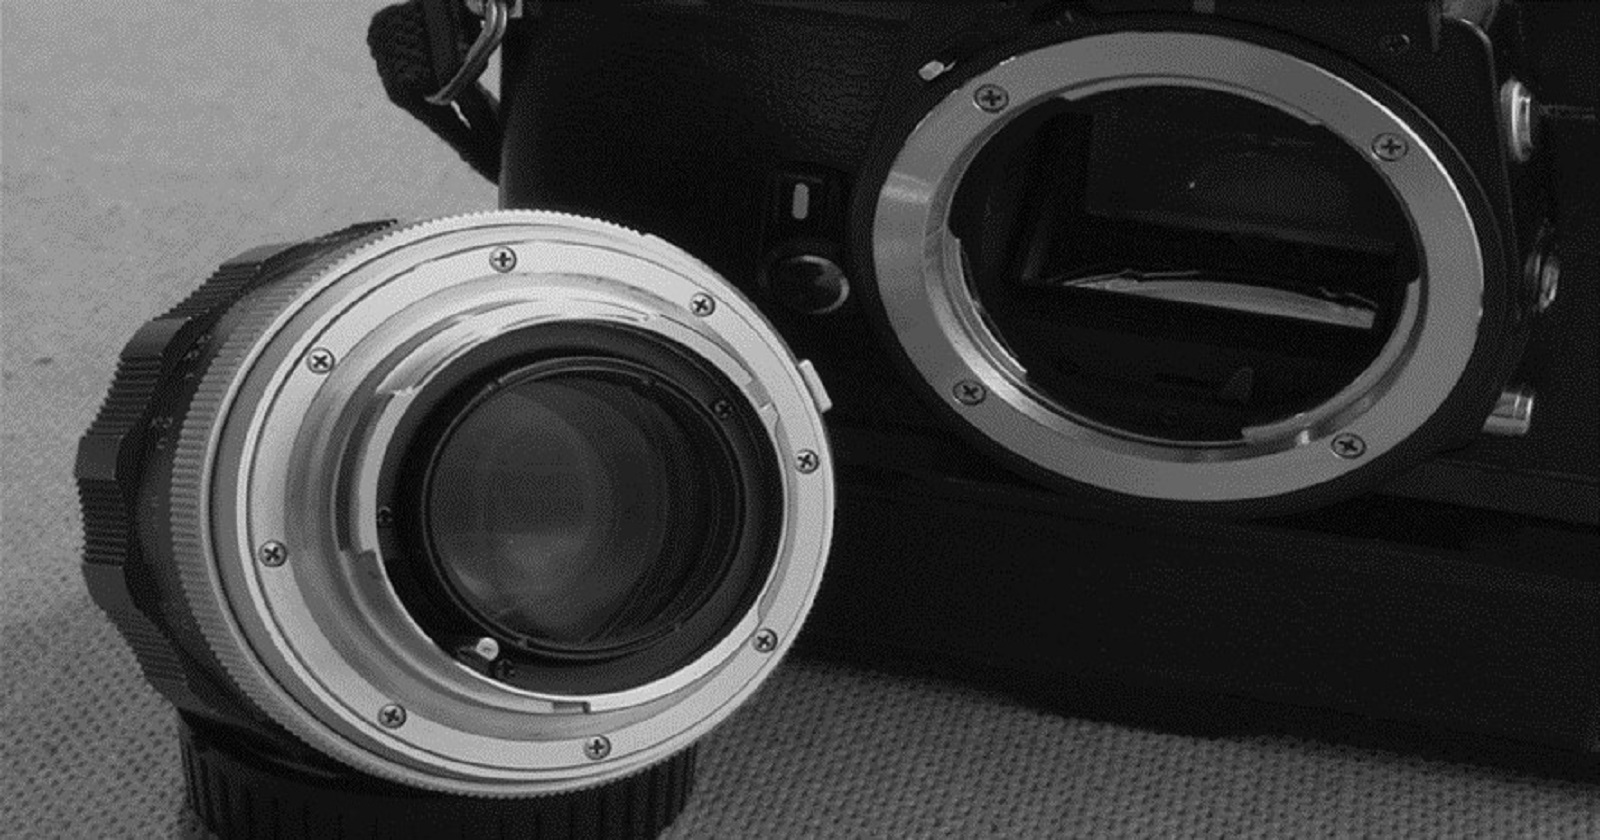 Camera Lens Mount Types